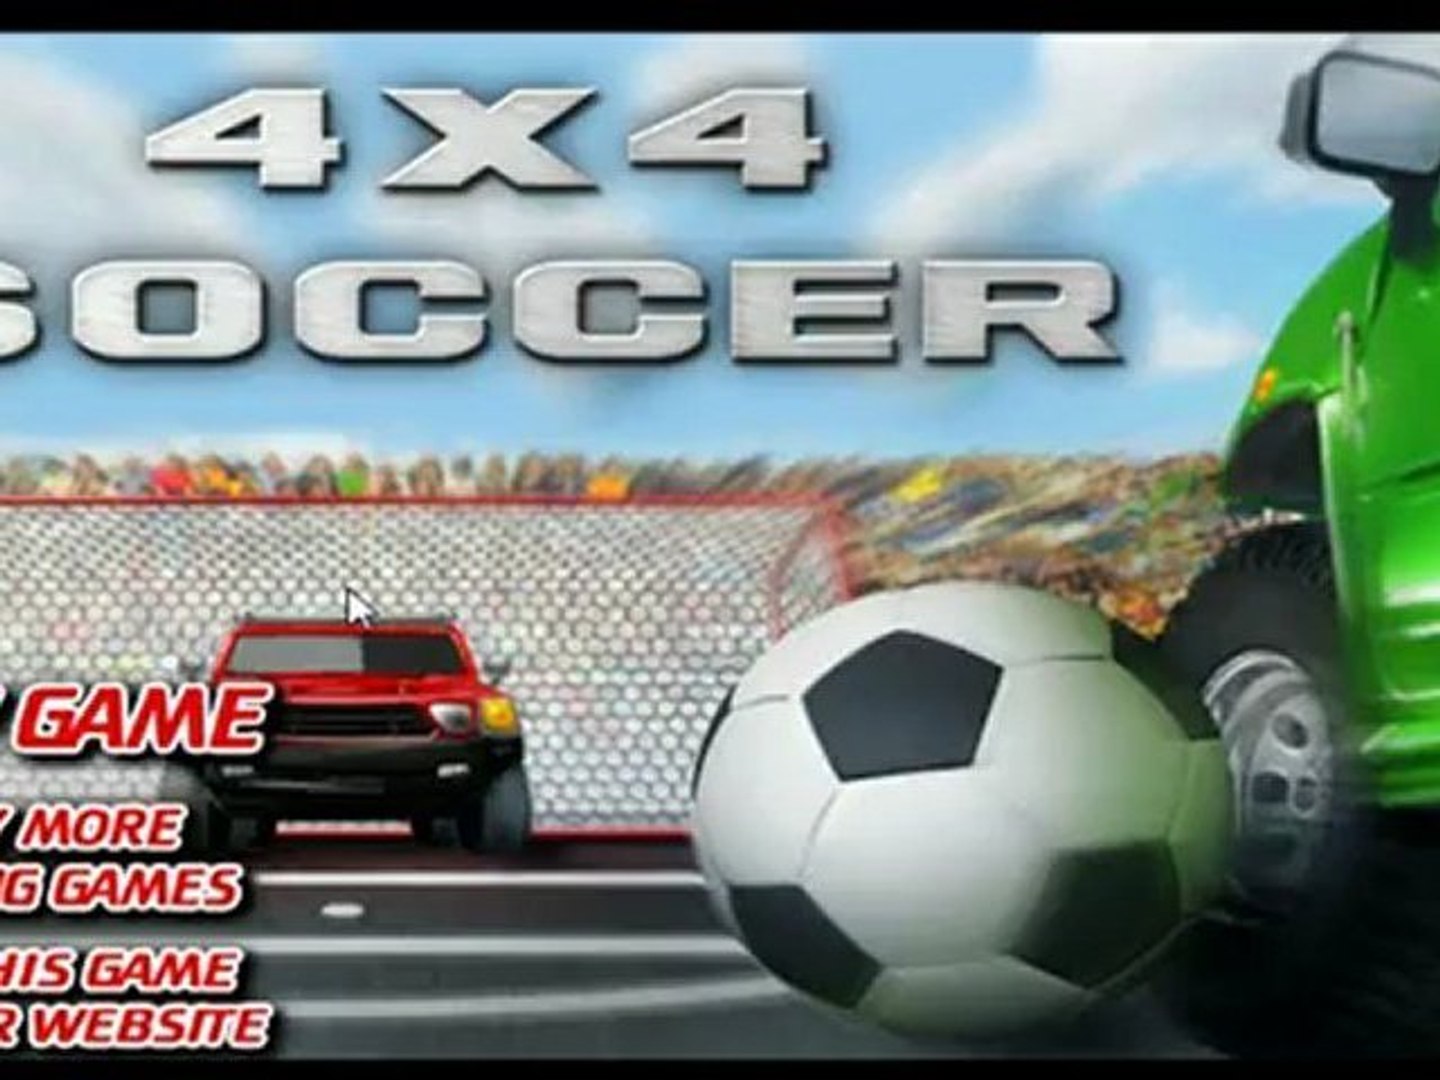 Araba Futbolu - Futbol Oyunları - topoyunlari.com - Dailymotion Video